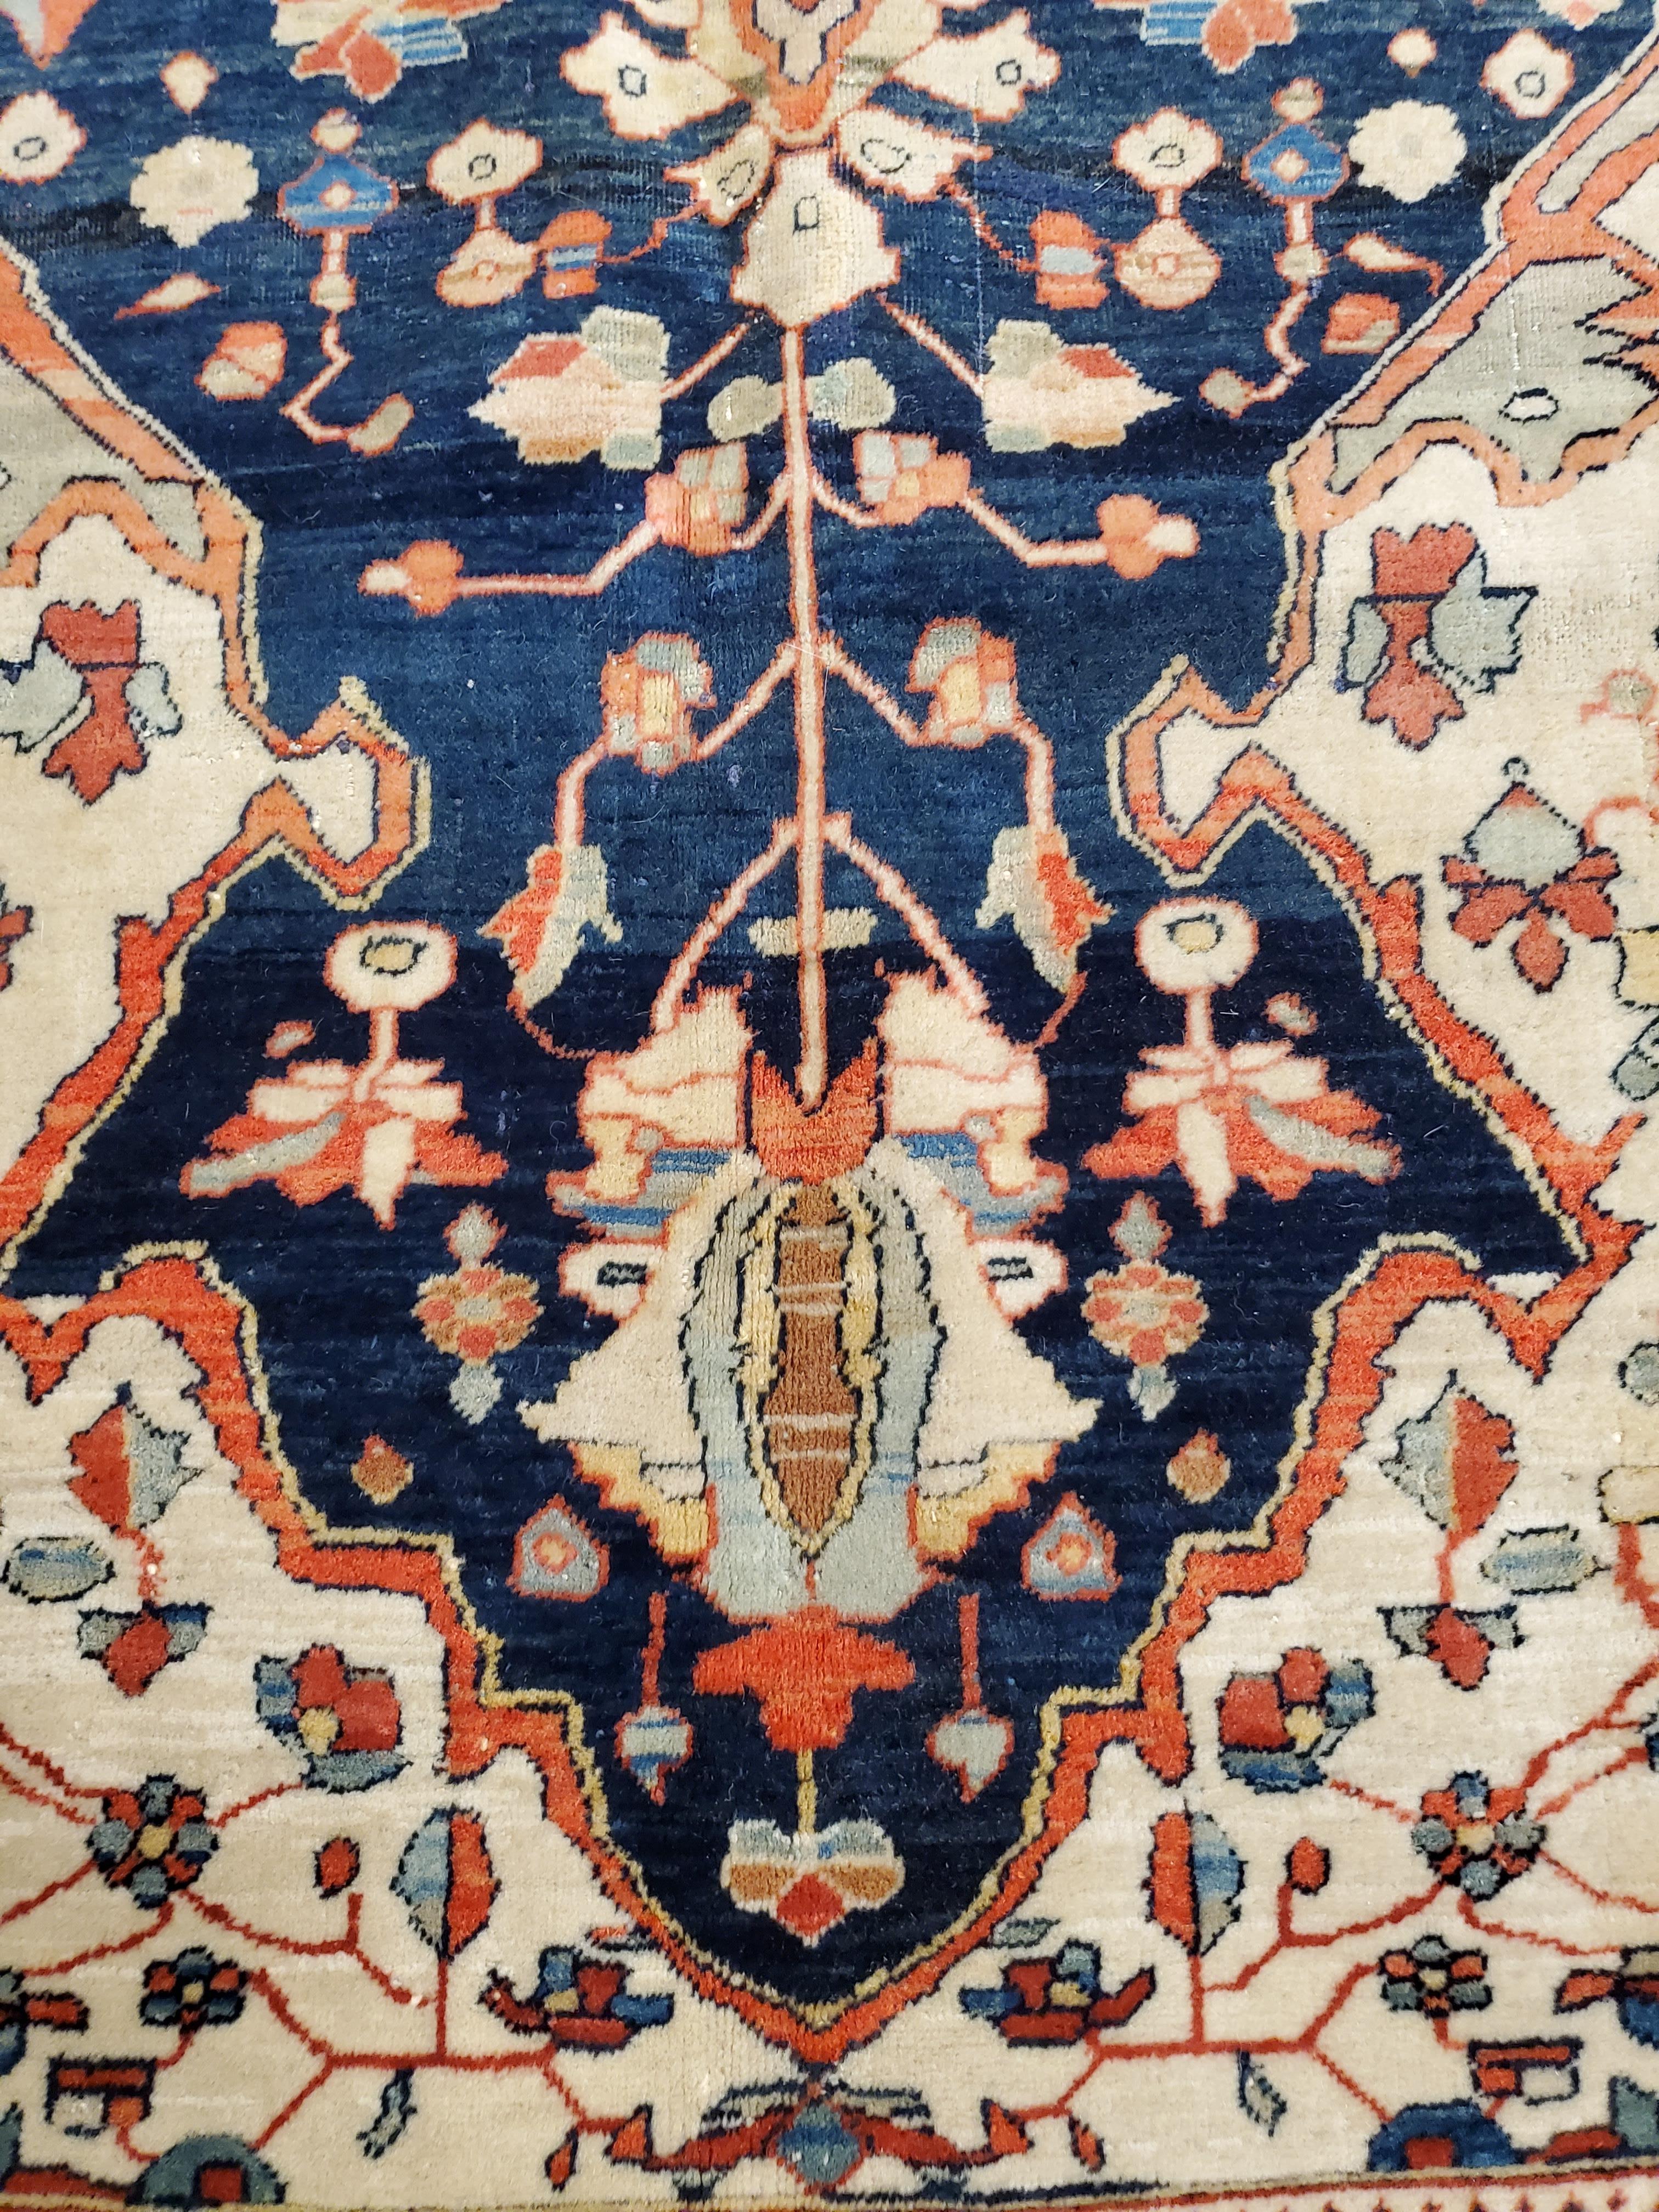 Antique Persian Mohtasham Kashan Carpet, Traditional, Ivory, Blue, Green, Reds 4